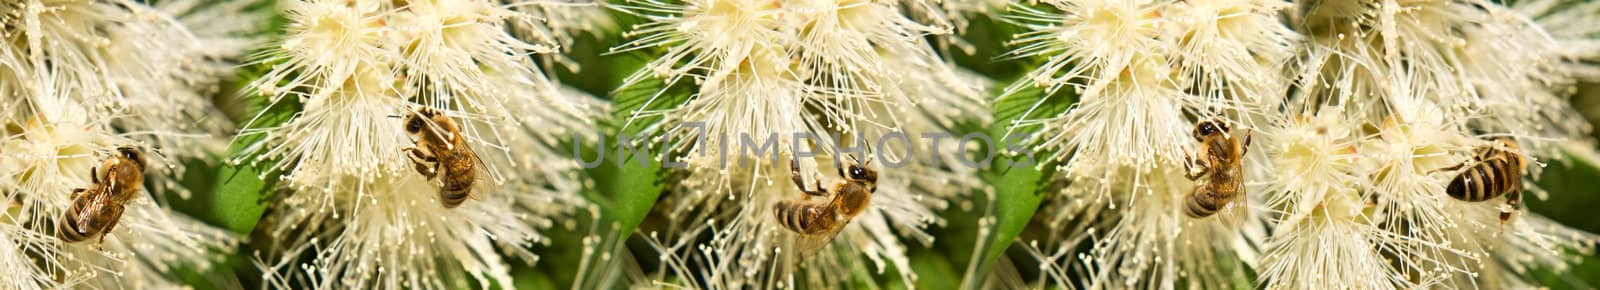 Spring Bees on white syzygium flowers border by sherj